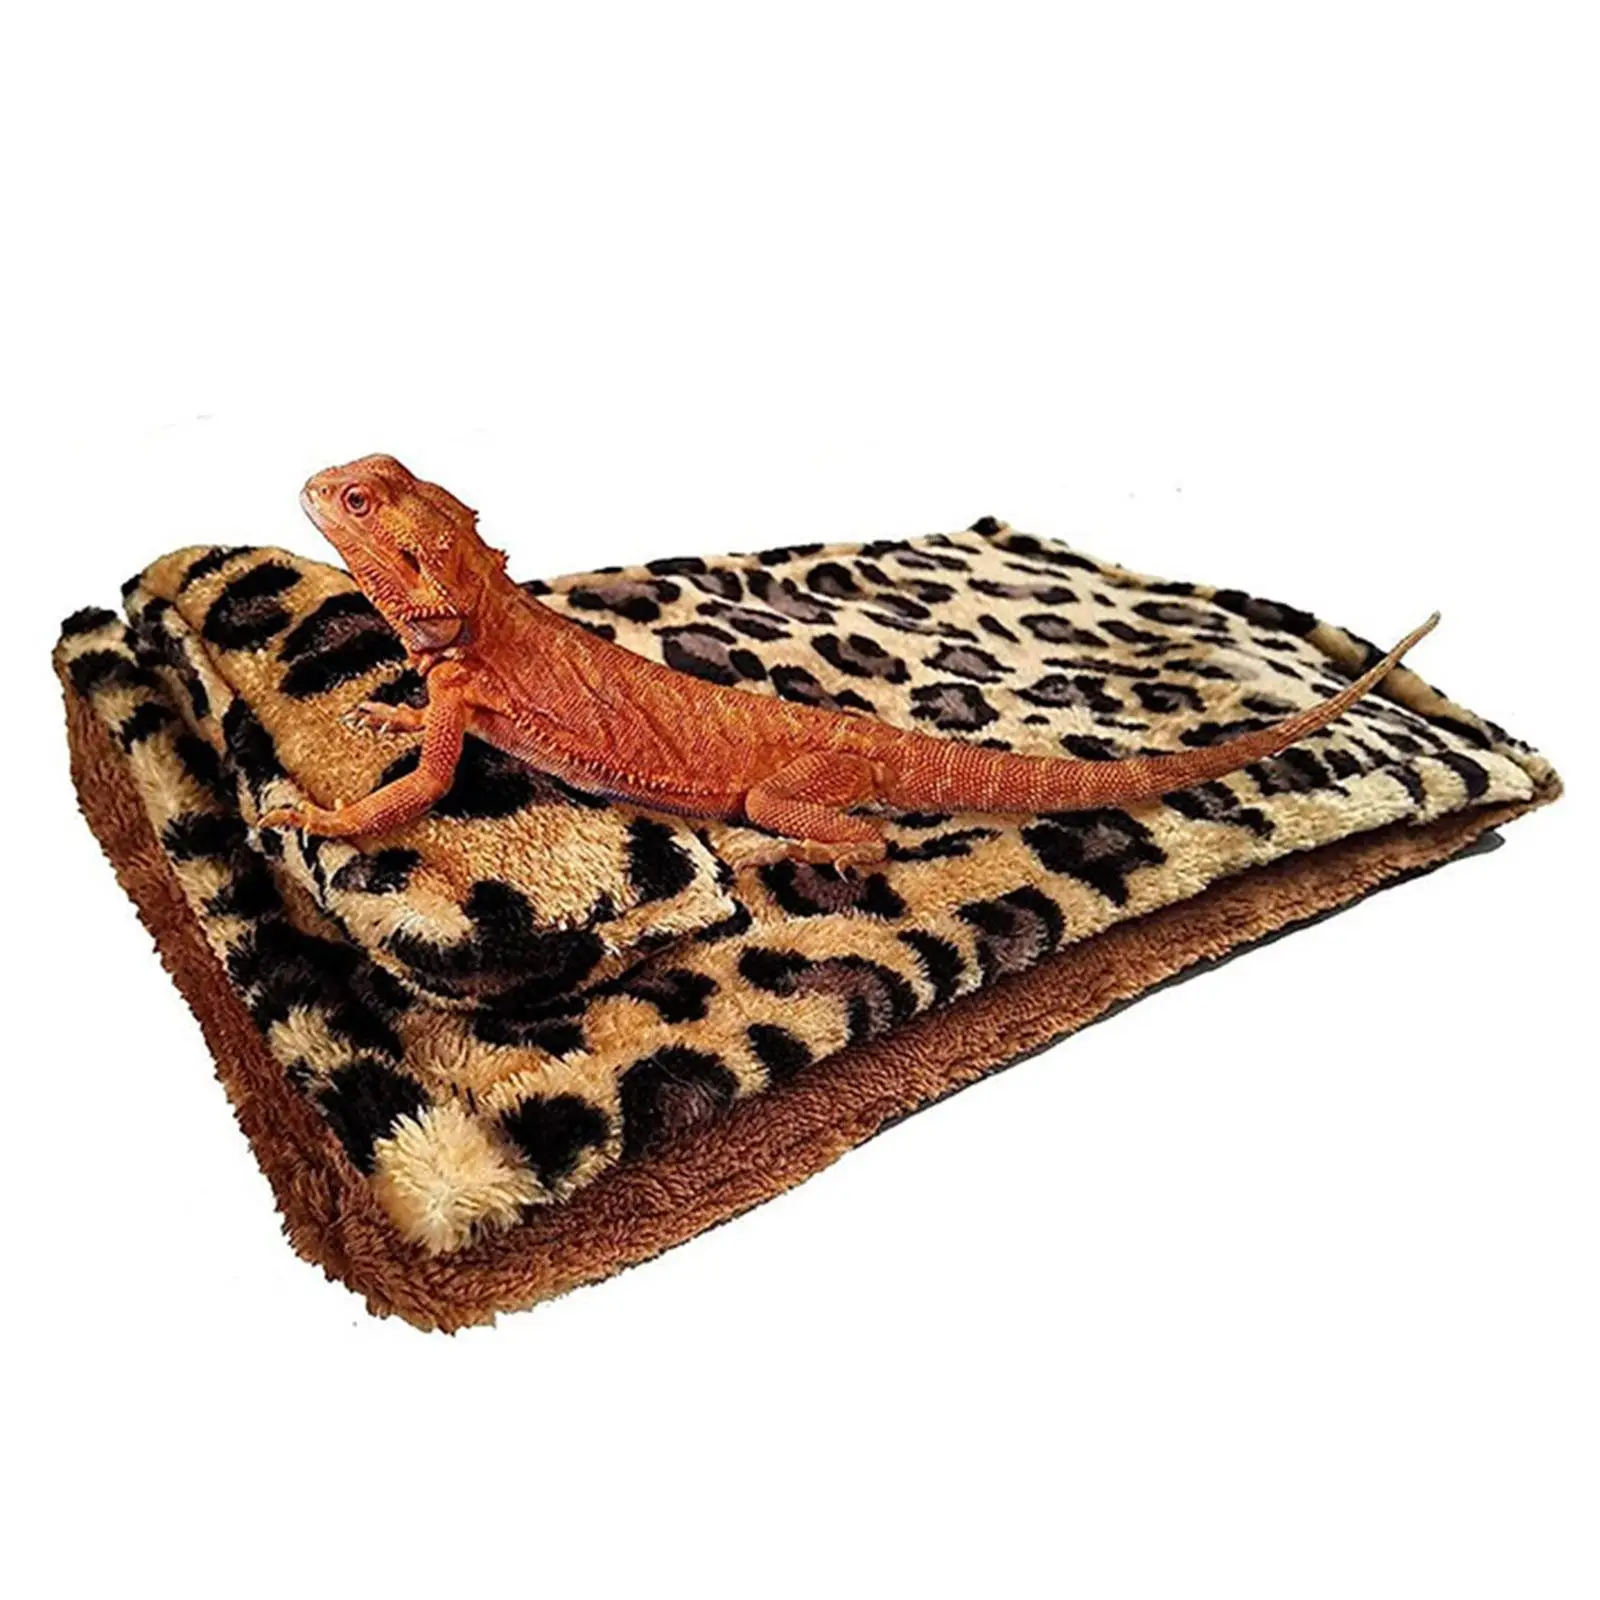 Bearded Dragon Bed Reptile Sleeping Bag for Leopard Gecko Bearded Dragon